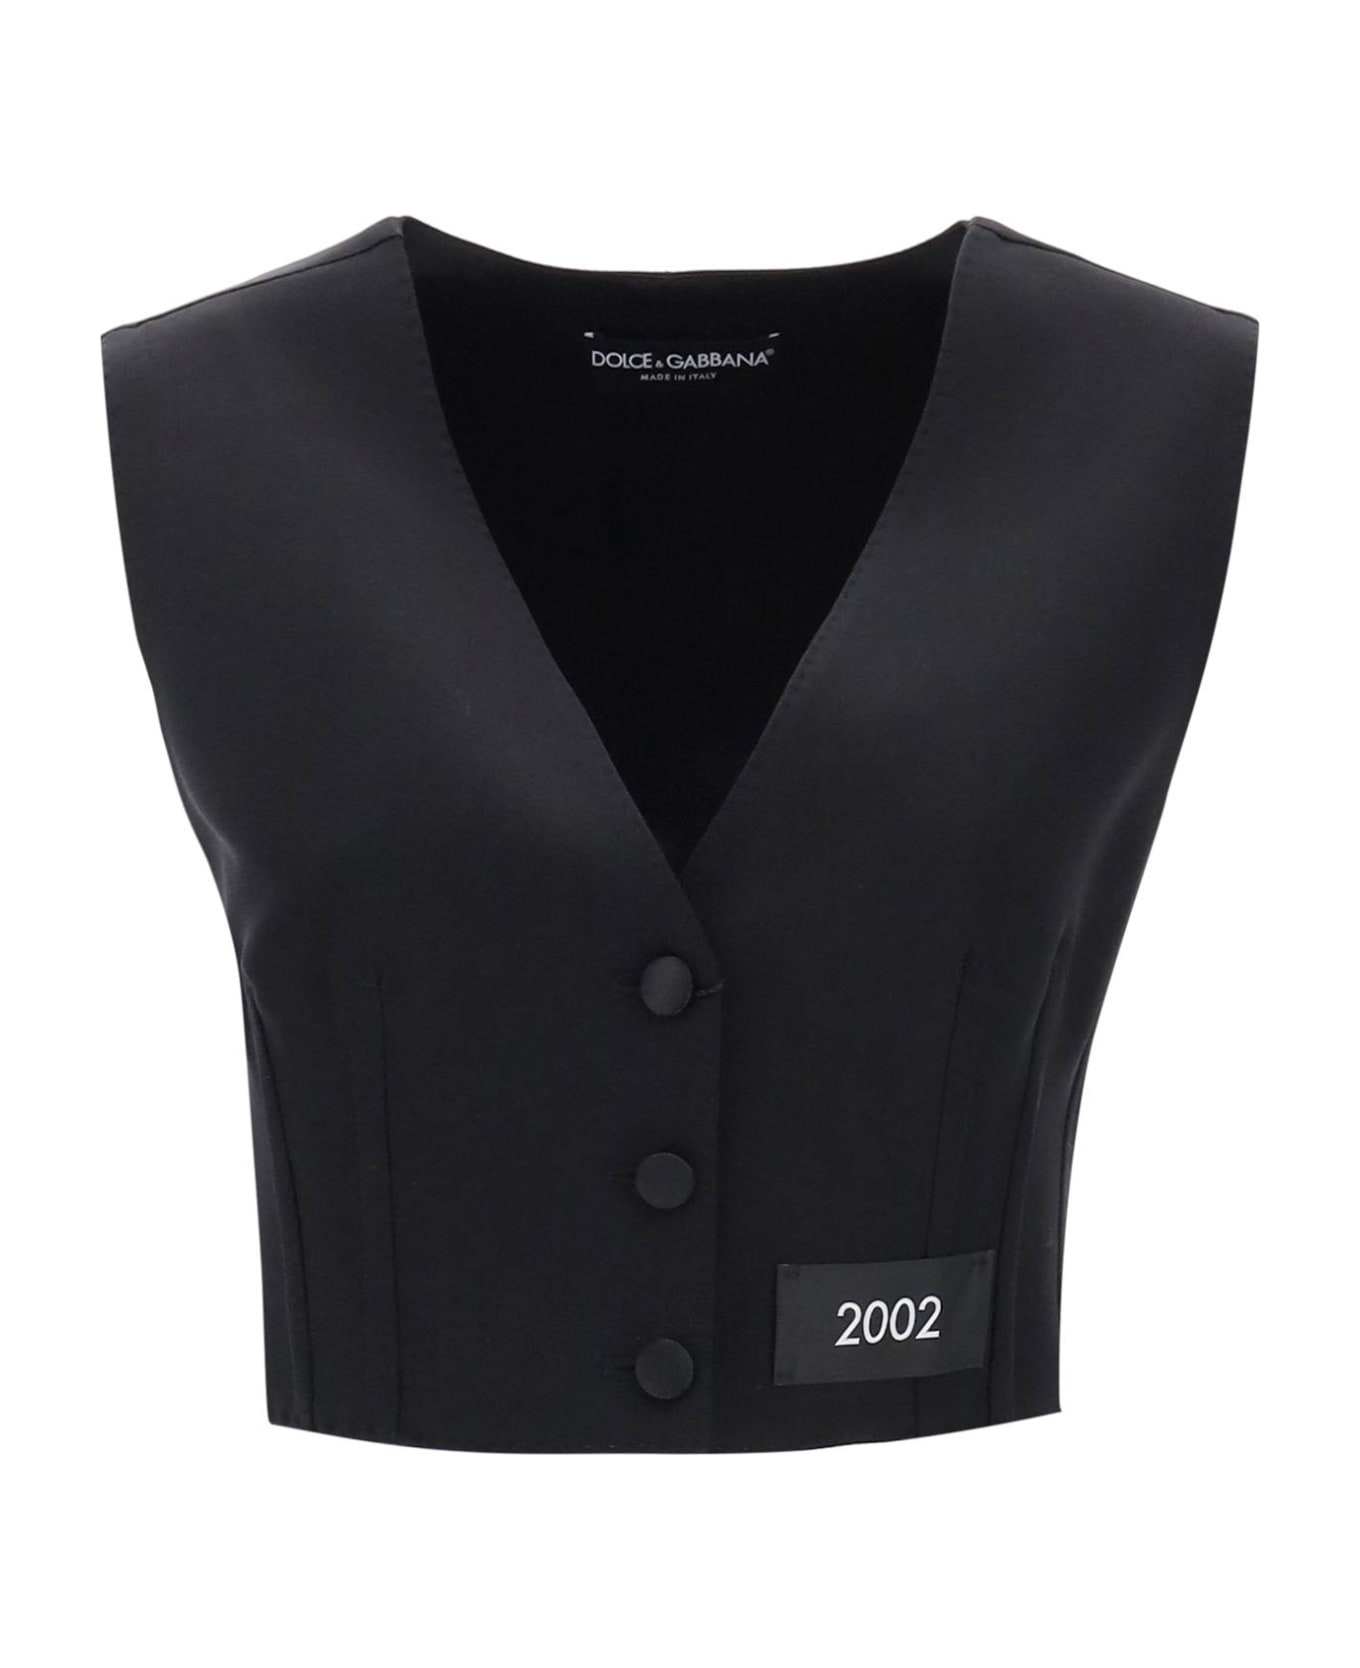 Dolce & Gabbana Re-edition Tailoring Waistcoat - NERO (Black)